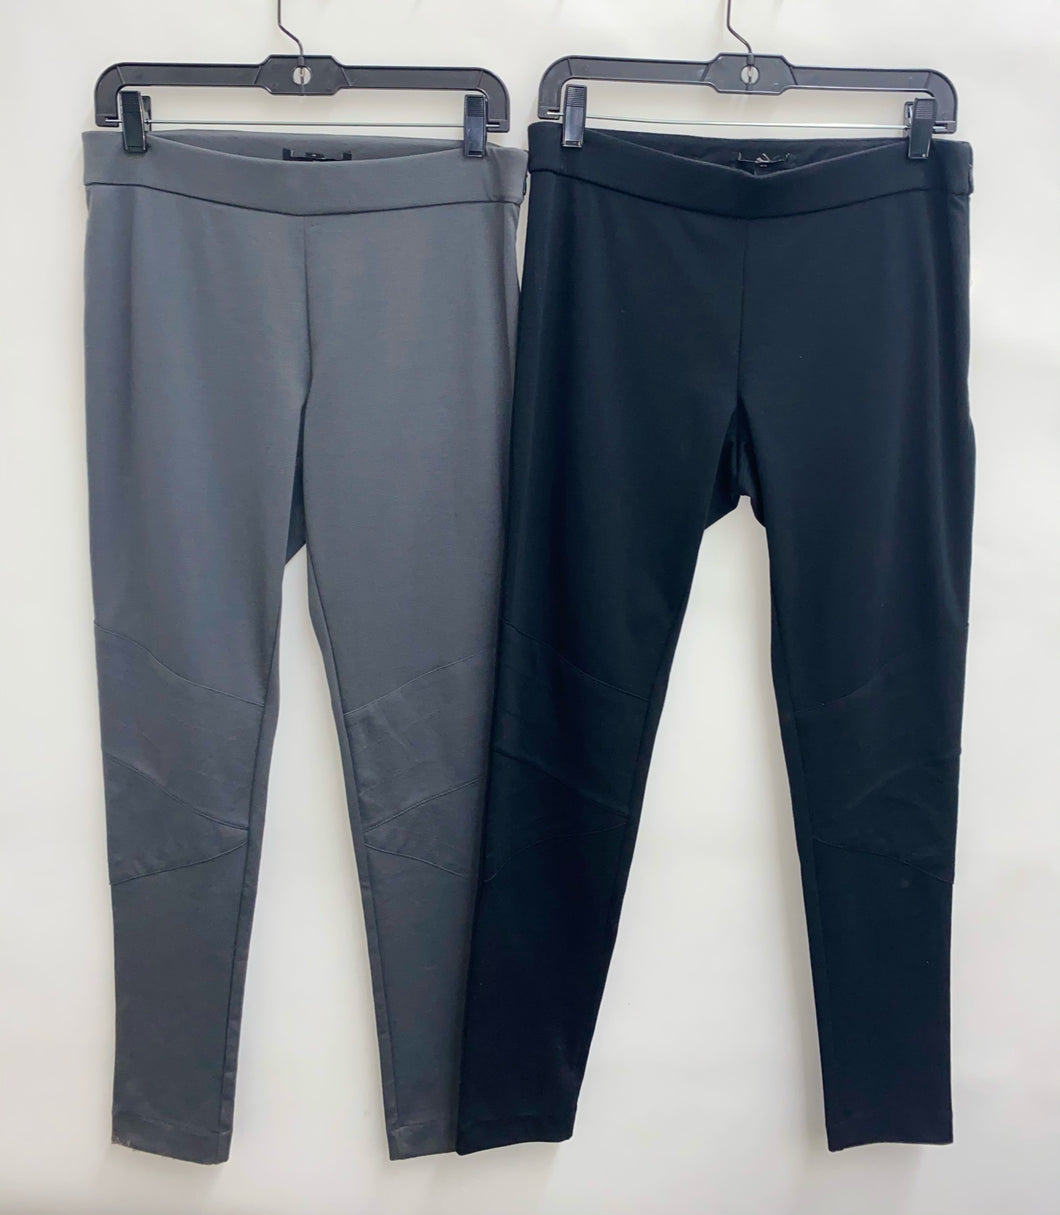 Black & Gray Dress pants (24 pack)